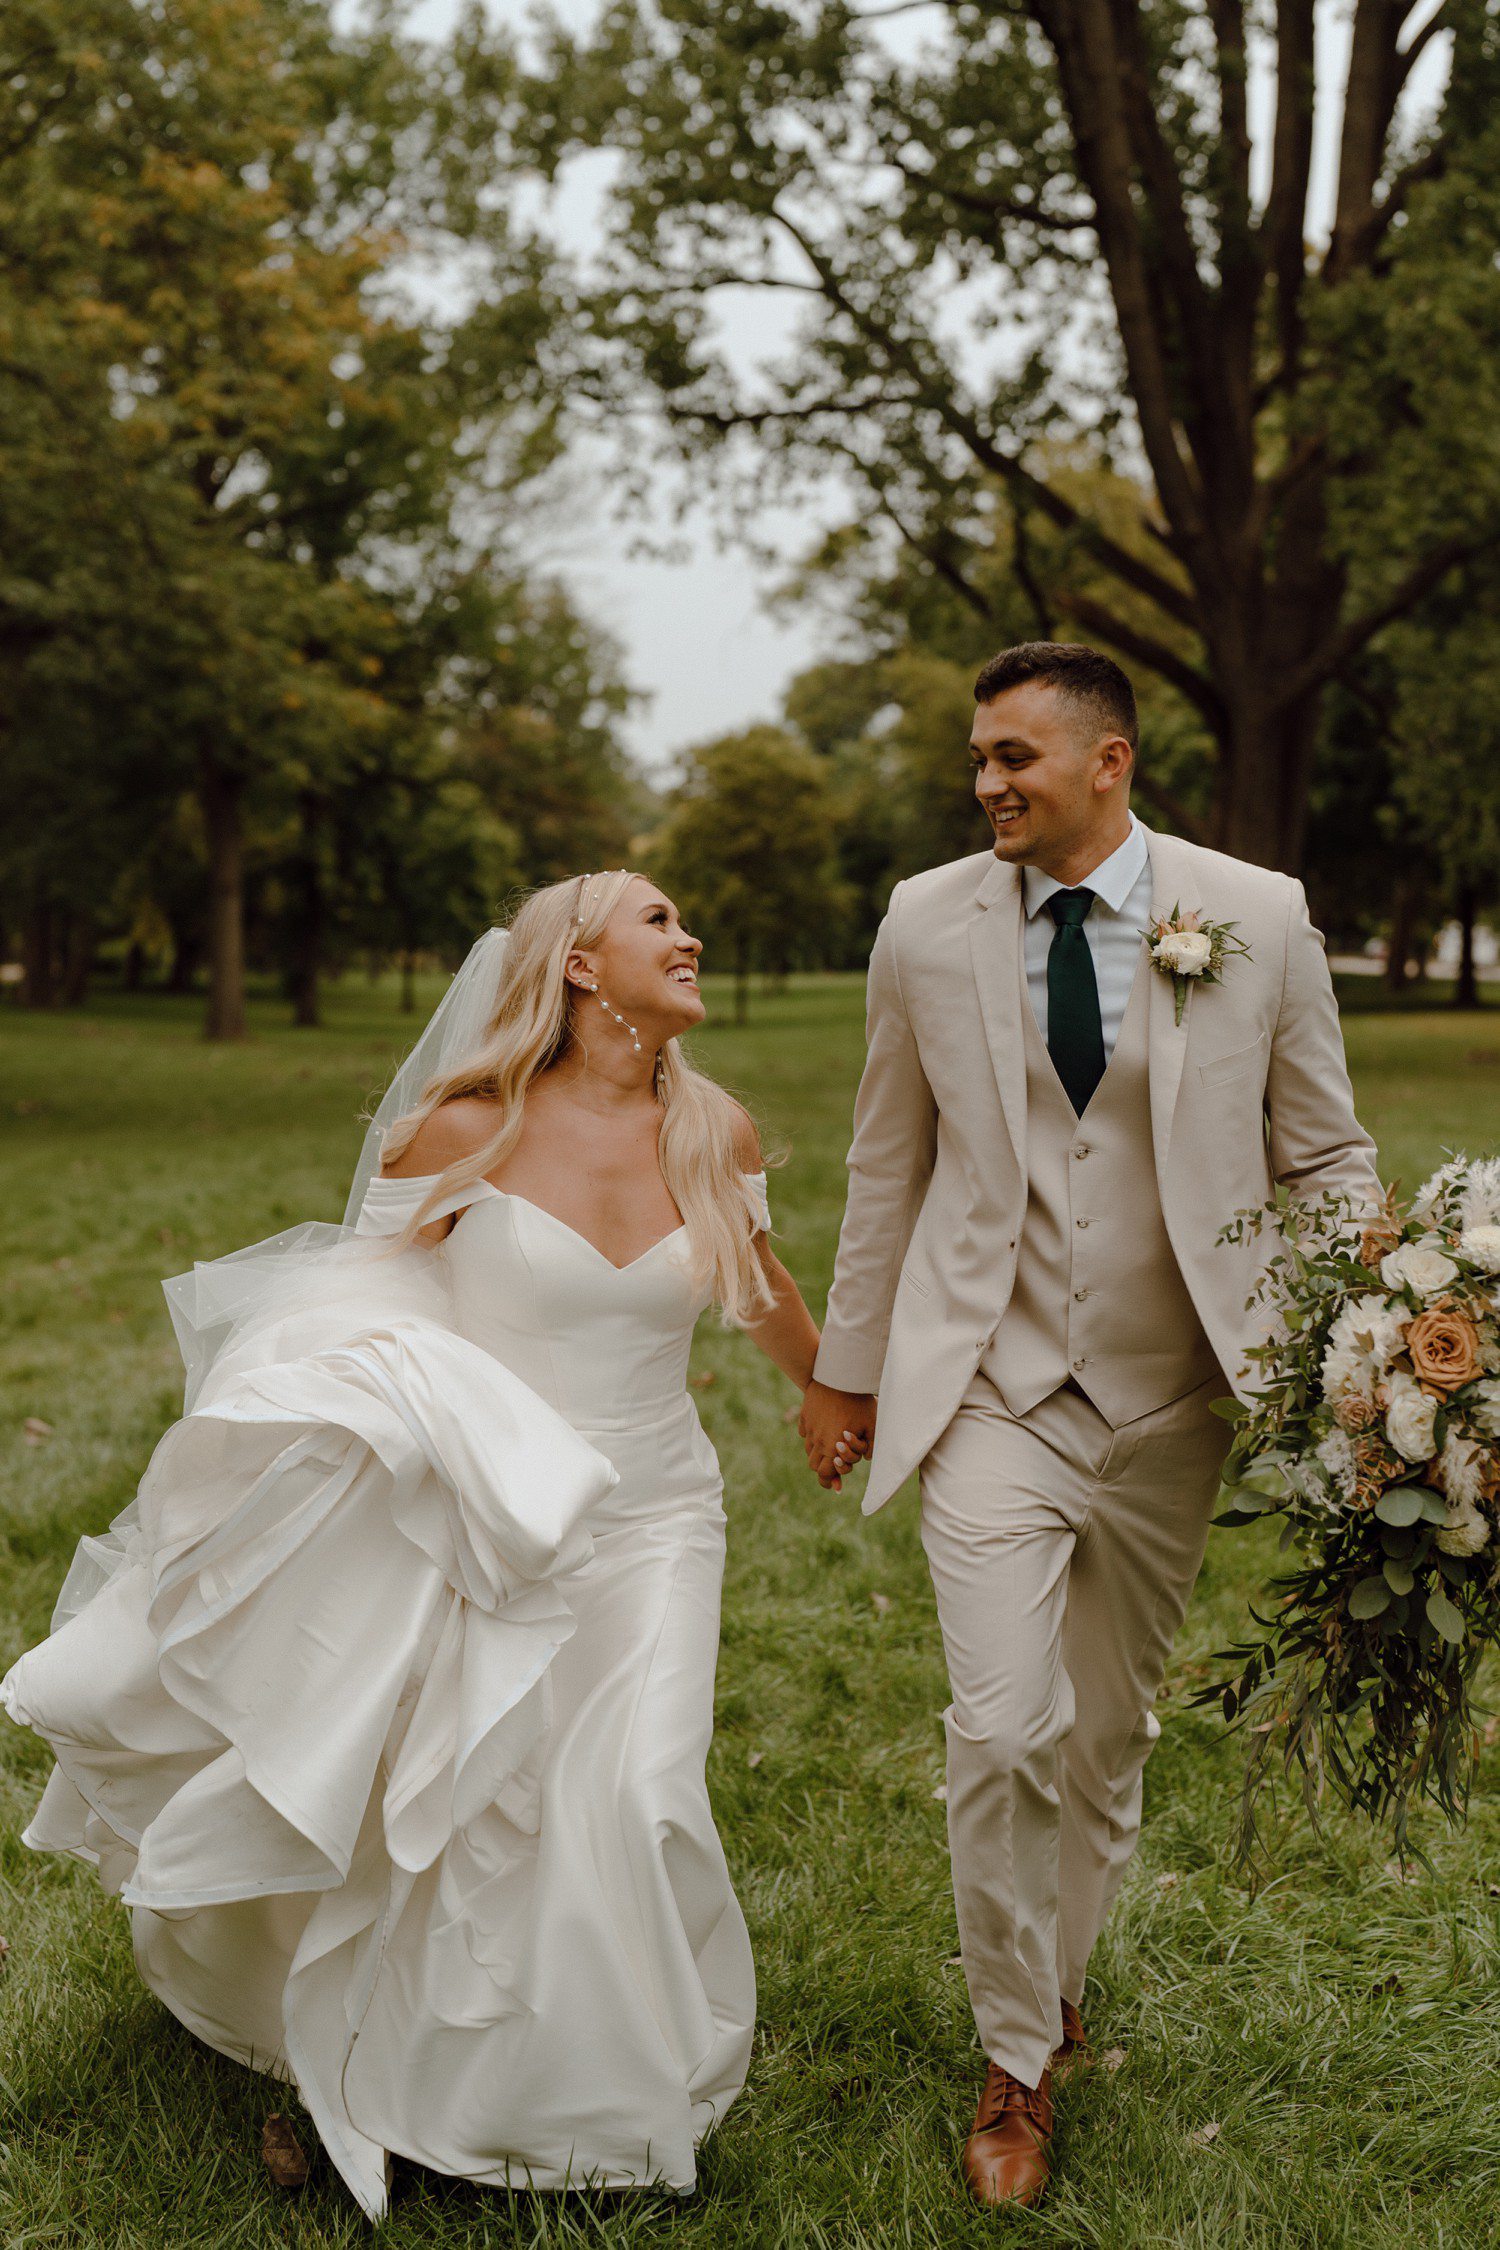 Wedding photos near downtown Grand Rapids.